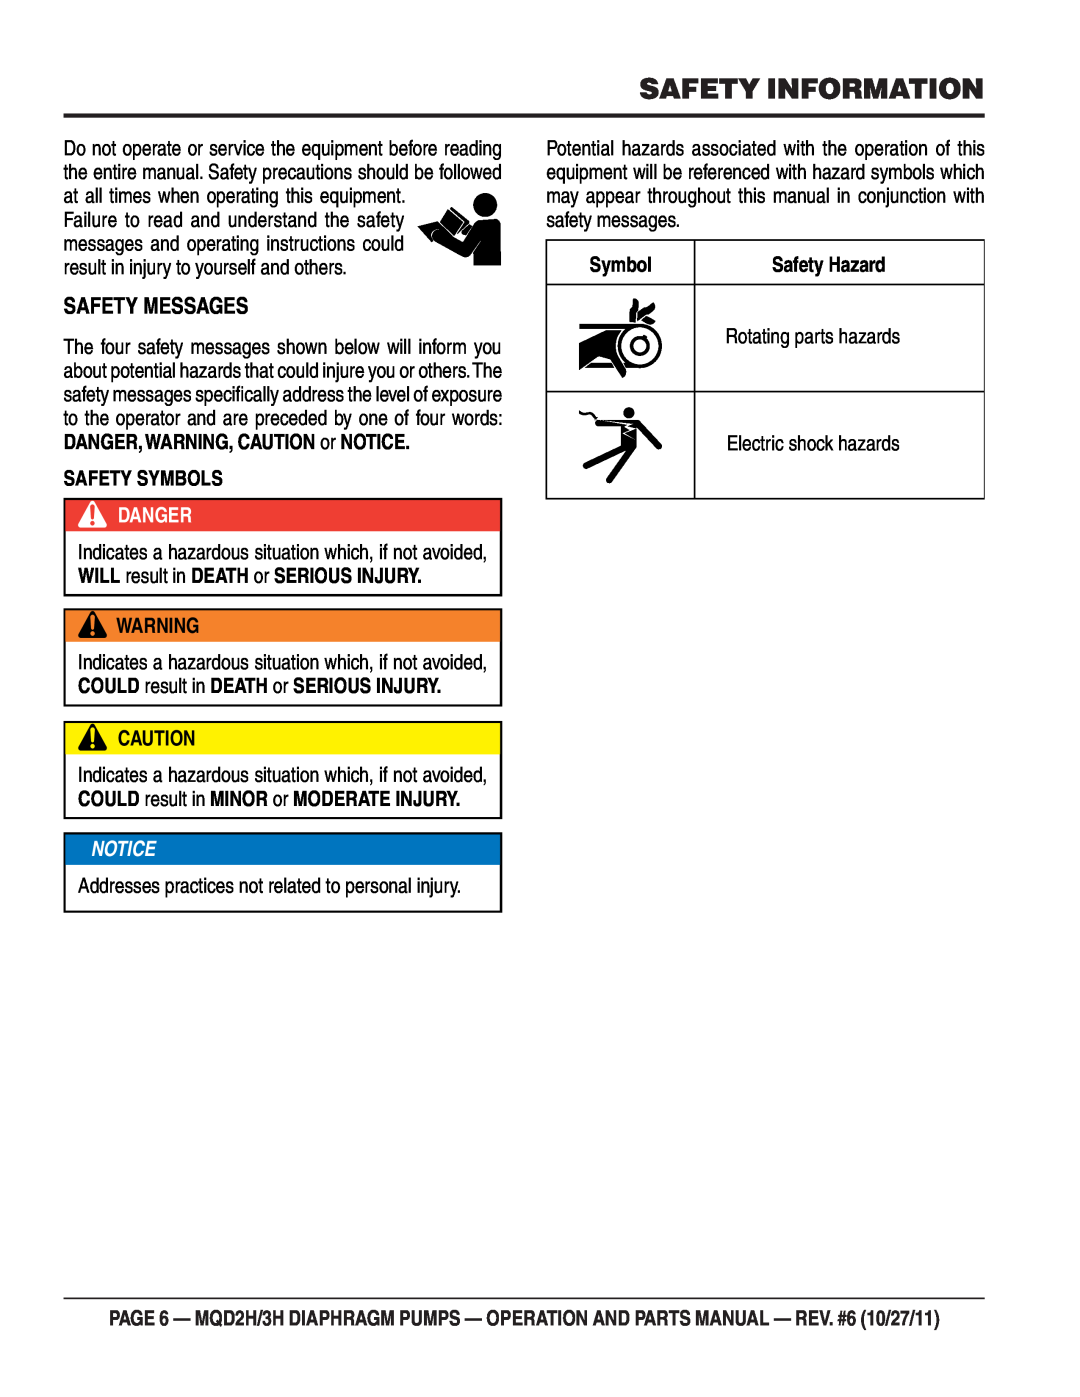 Multiquip MQD2H manual Safety Information, Safety Messages, Safety Symbols, Danger 